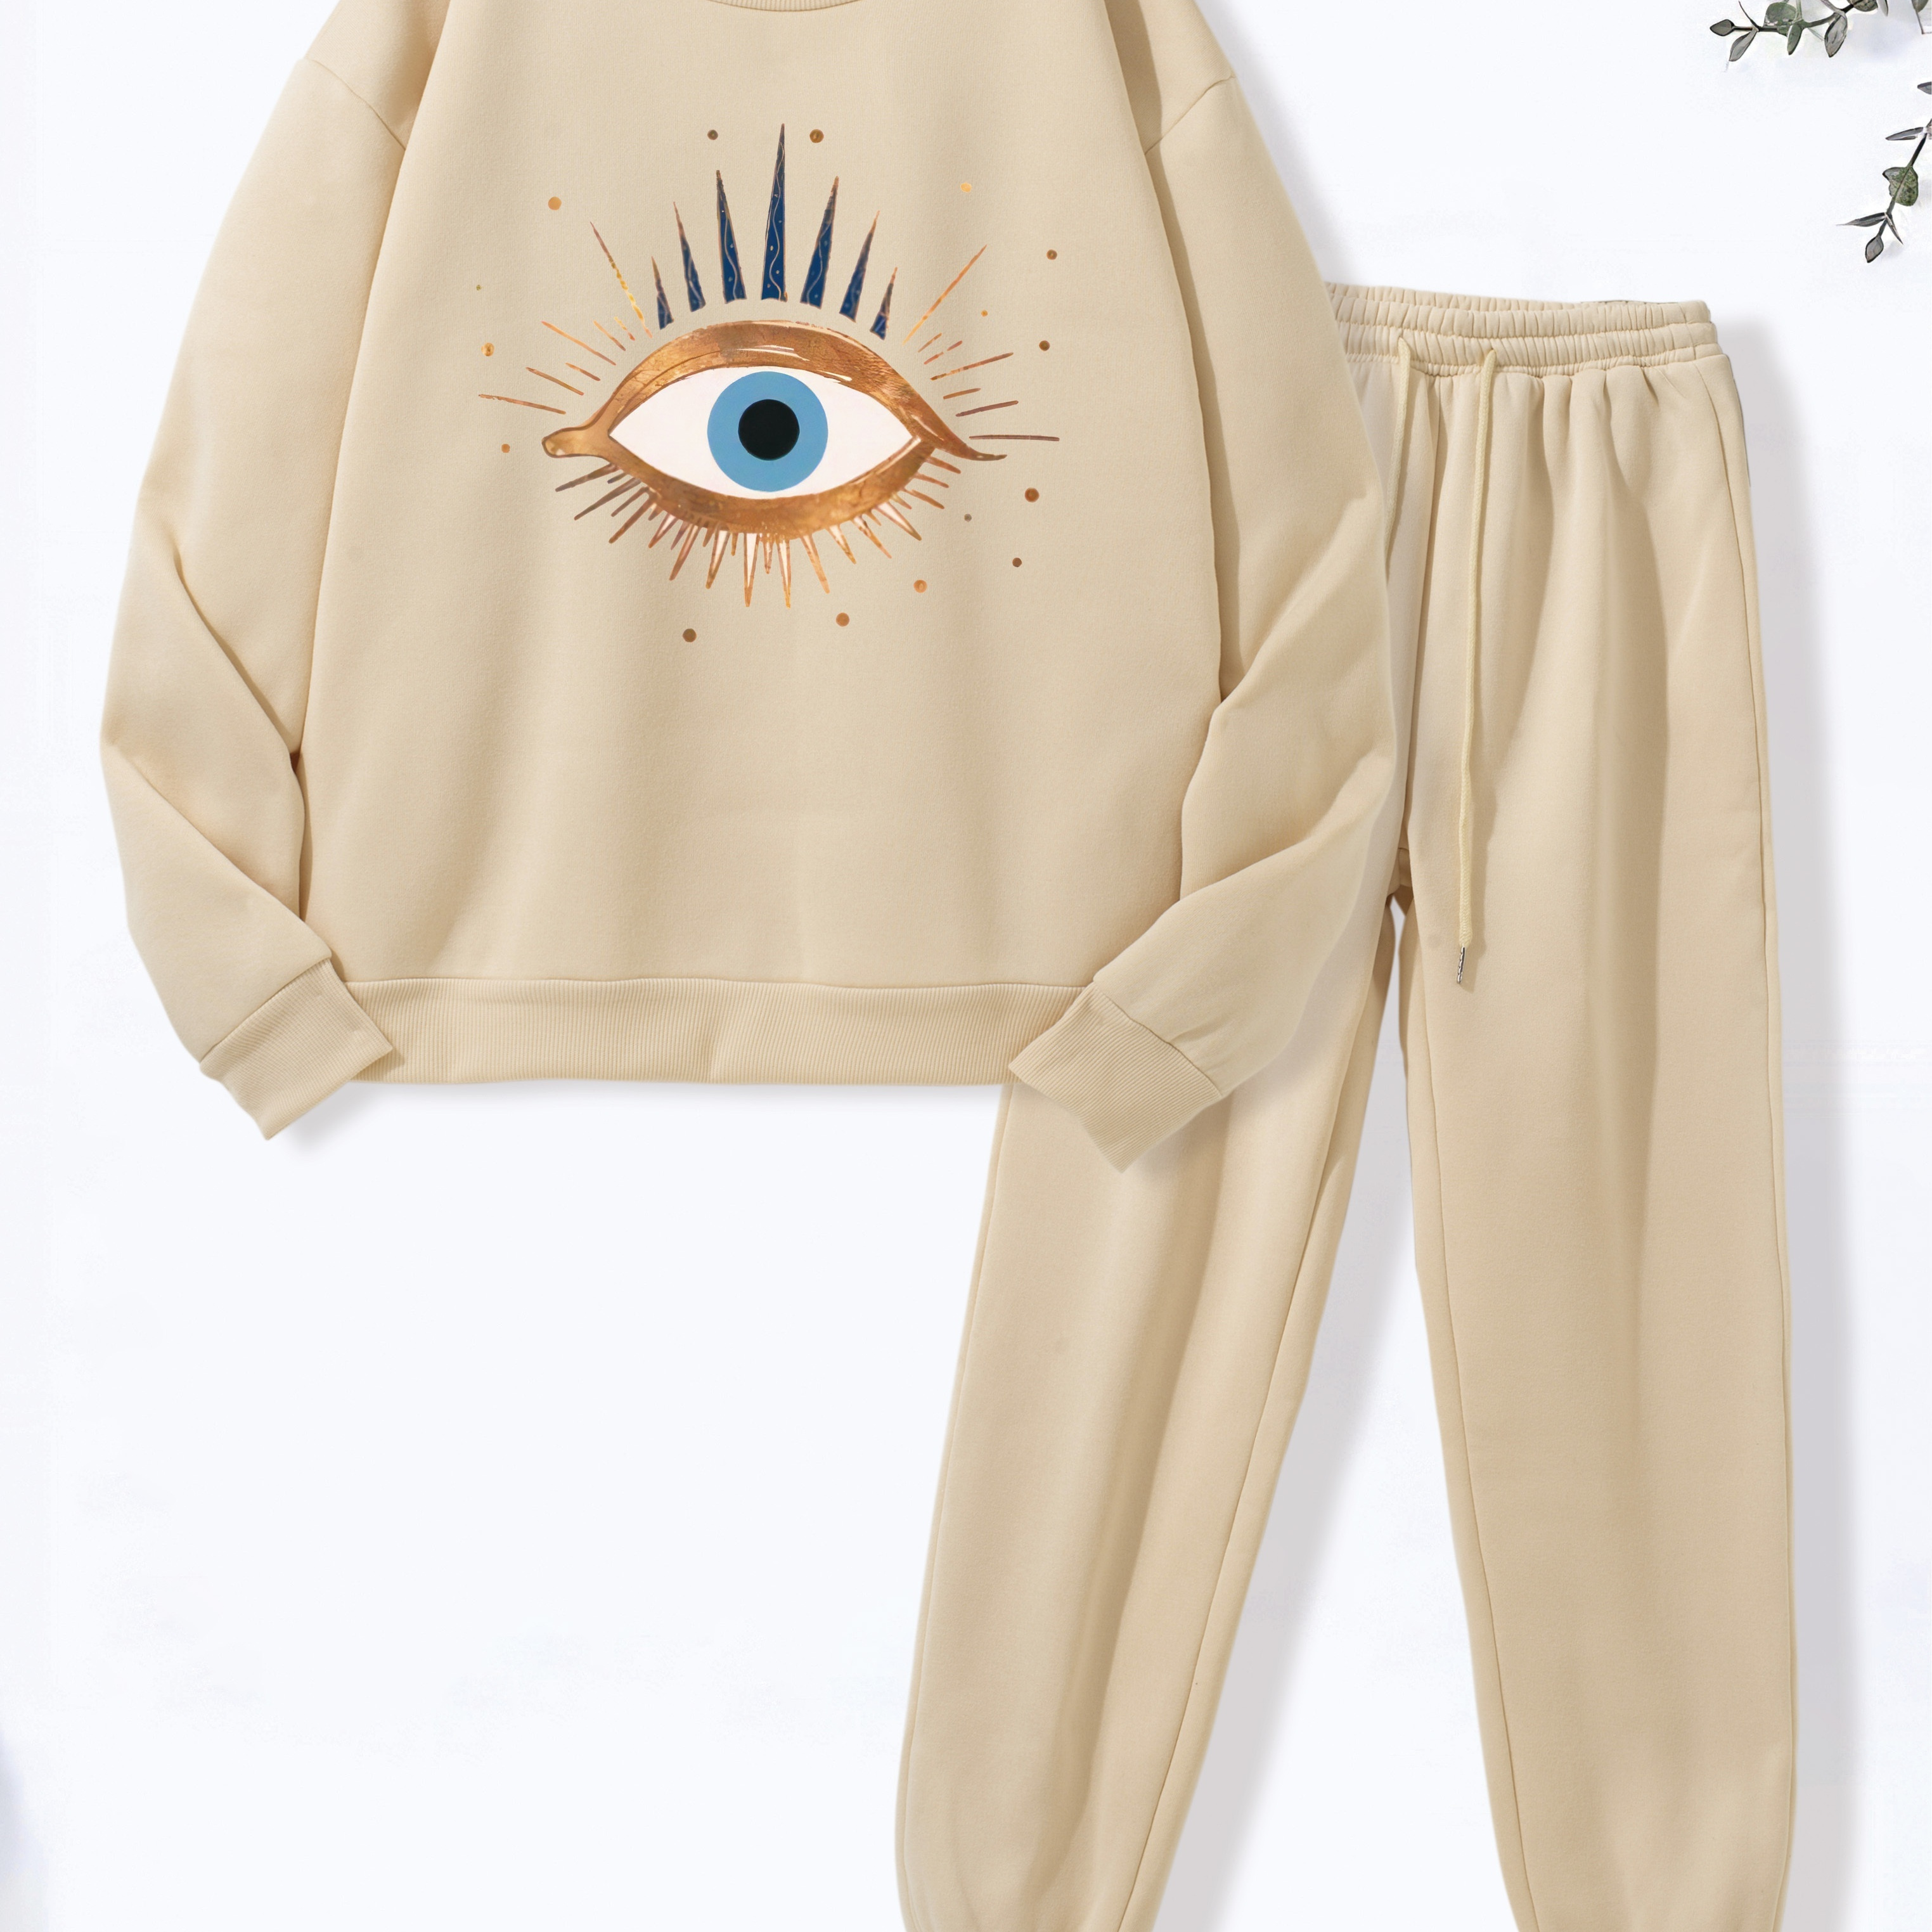 

Evil Eye Graphic Print 2 Piece Set, Crew Neck Sweatshirt & Pants, Women's Clothing